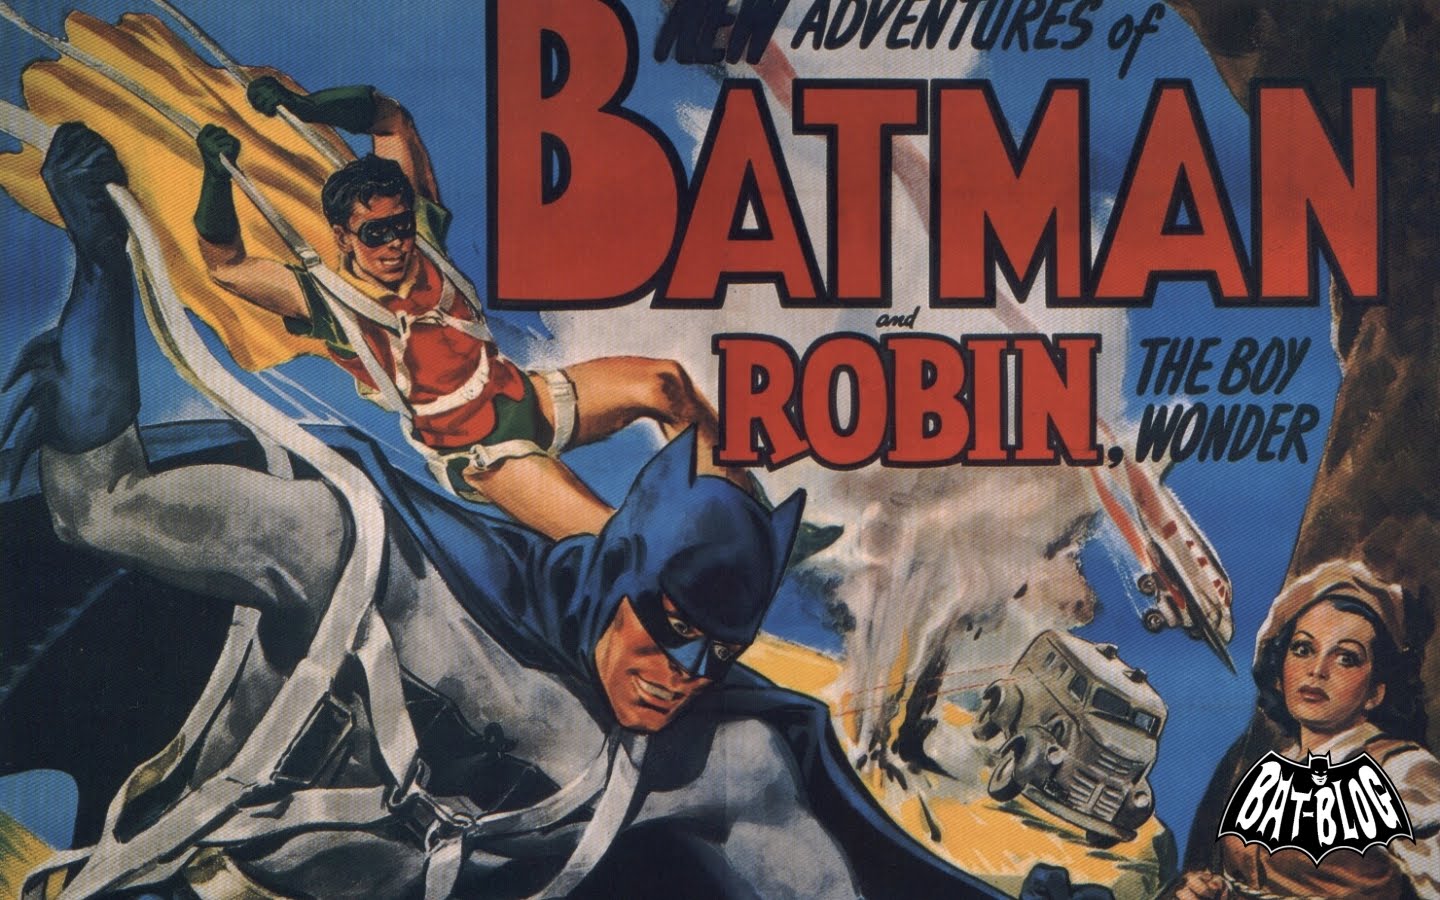 Batman Wallpaper Media: RETRO BATMAN BACKGROUNDS Wallpaper Wednesday!